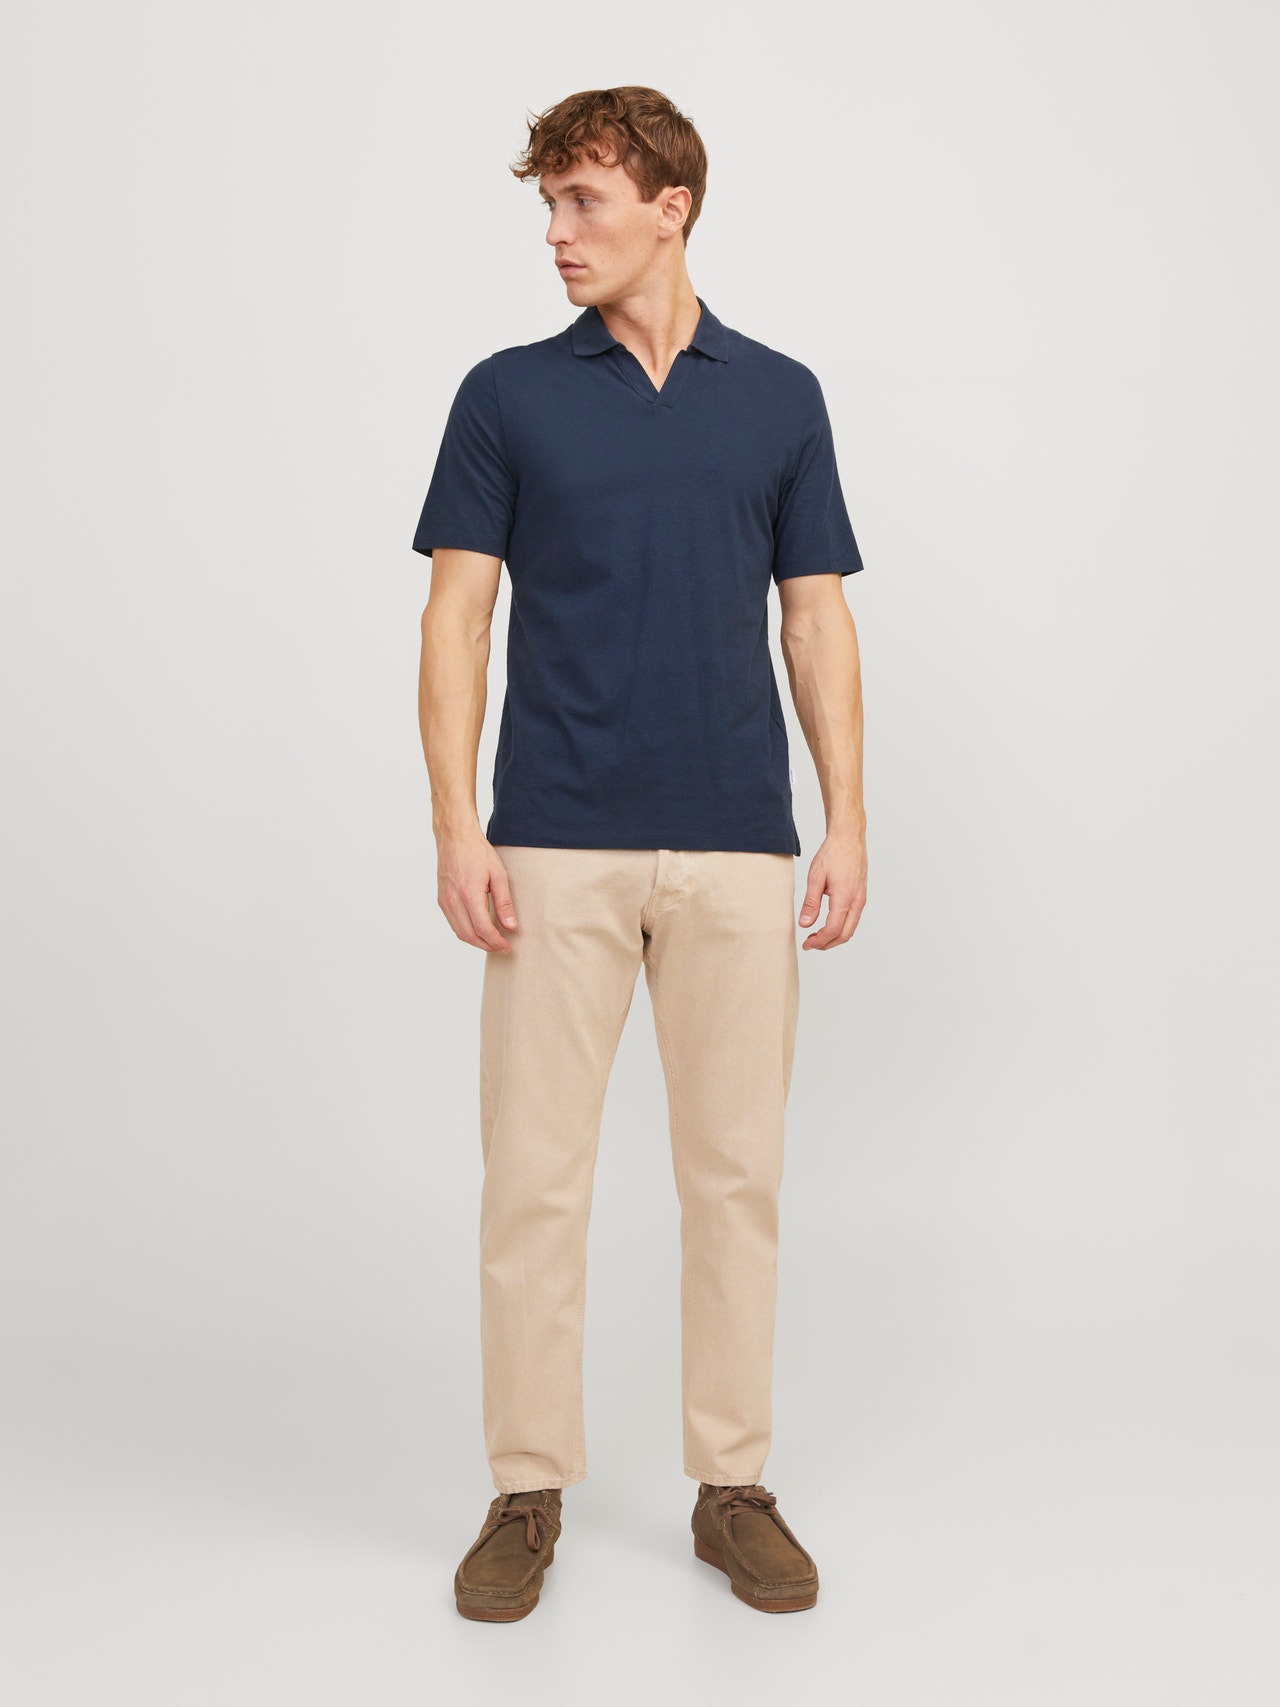 Jack & Jones T-shirt Uni Polo -Navy Blazer - 12246712